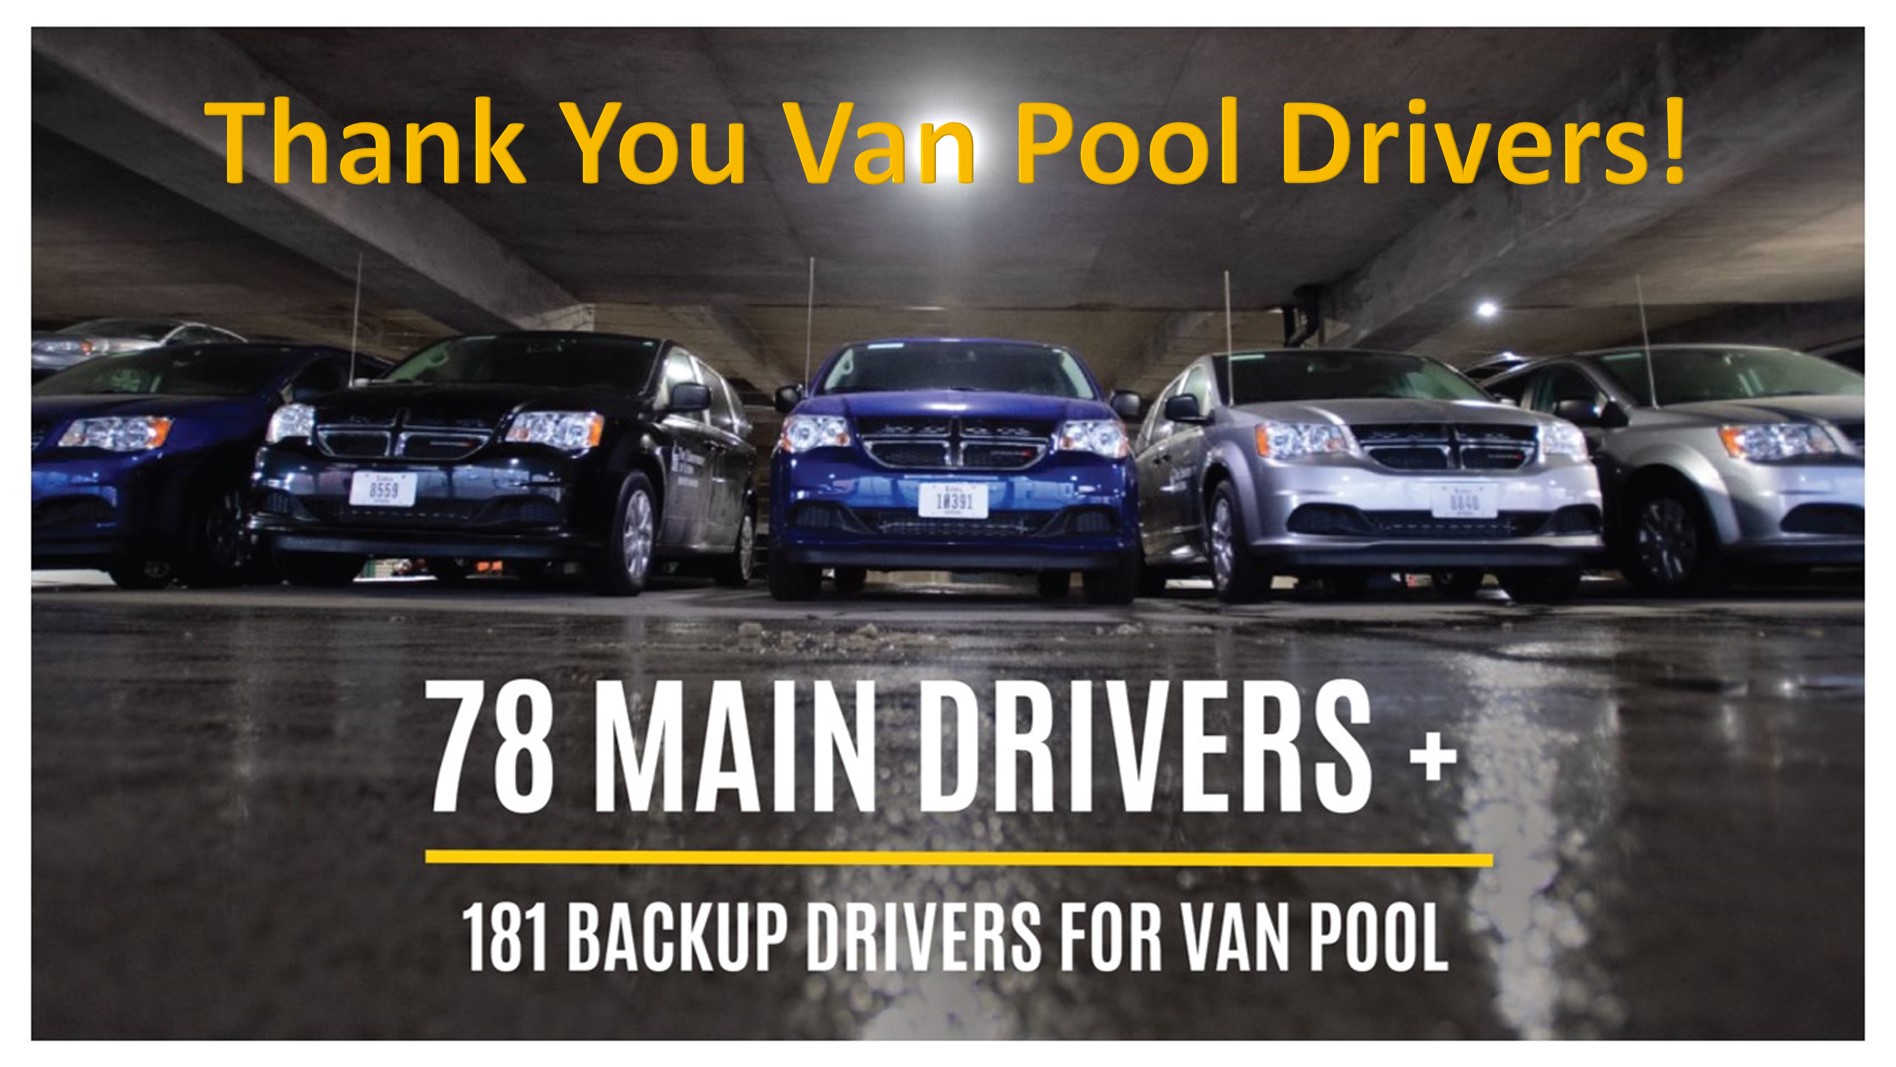 Thank you van pool drivers